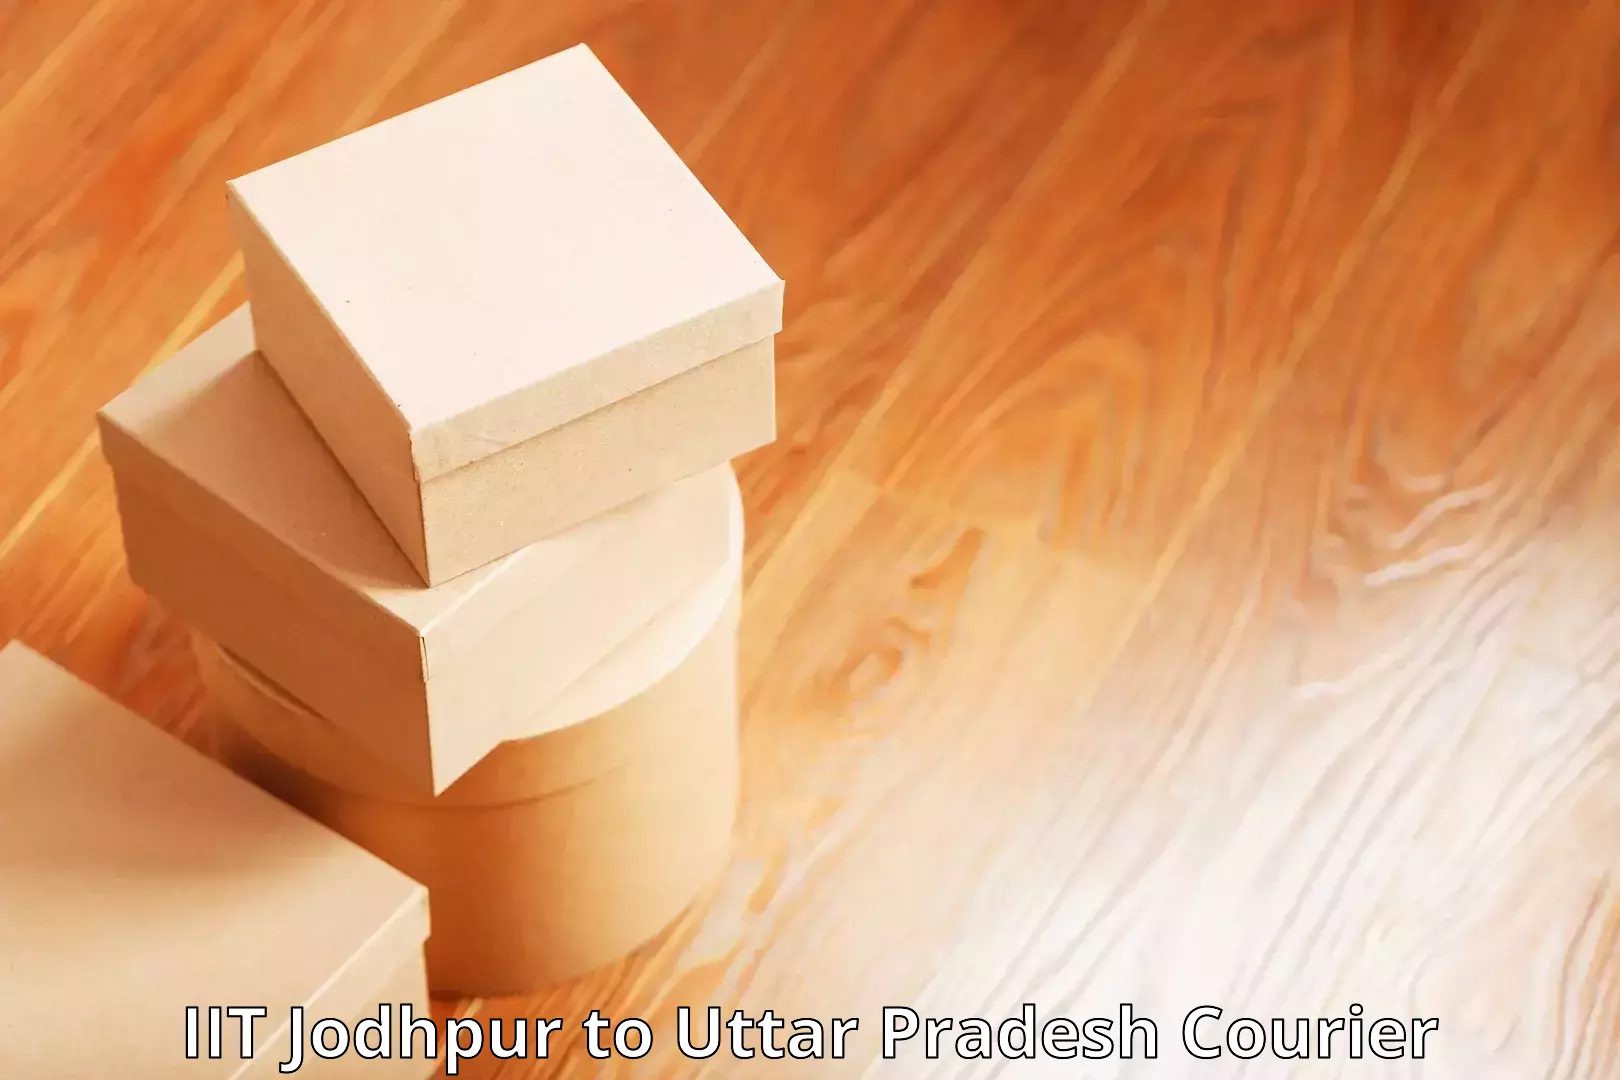 Cash on delivery service IIT Jodhpur to Gopiganj